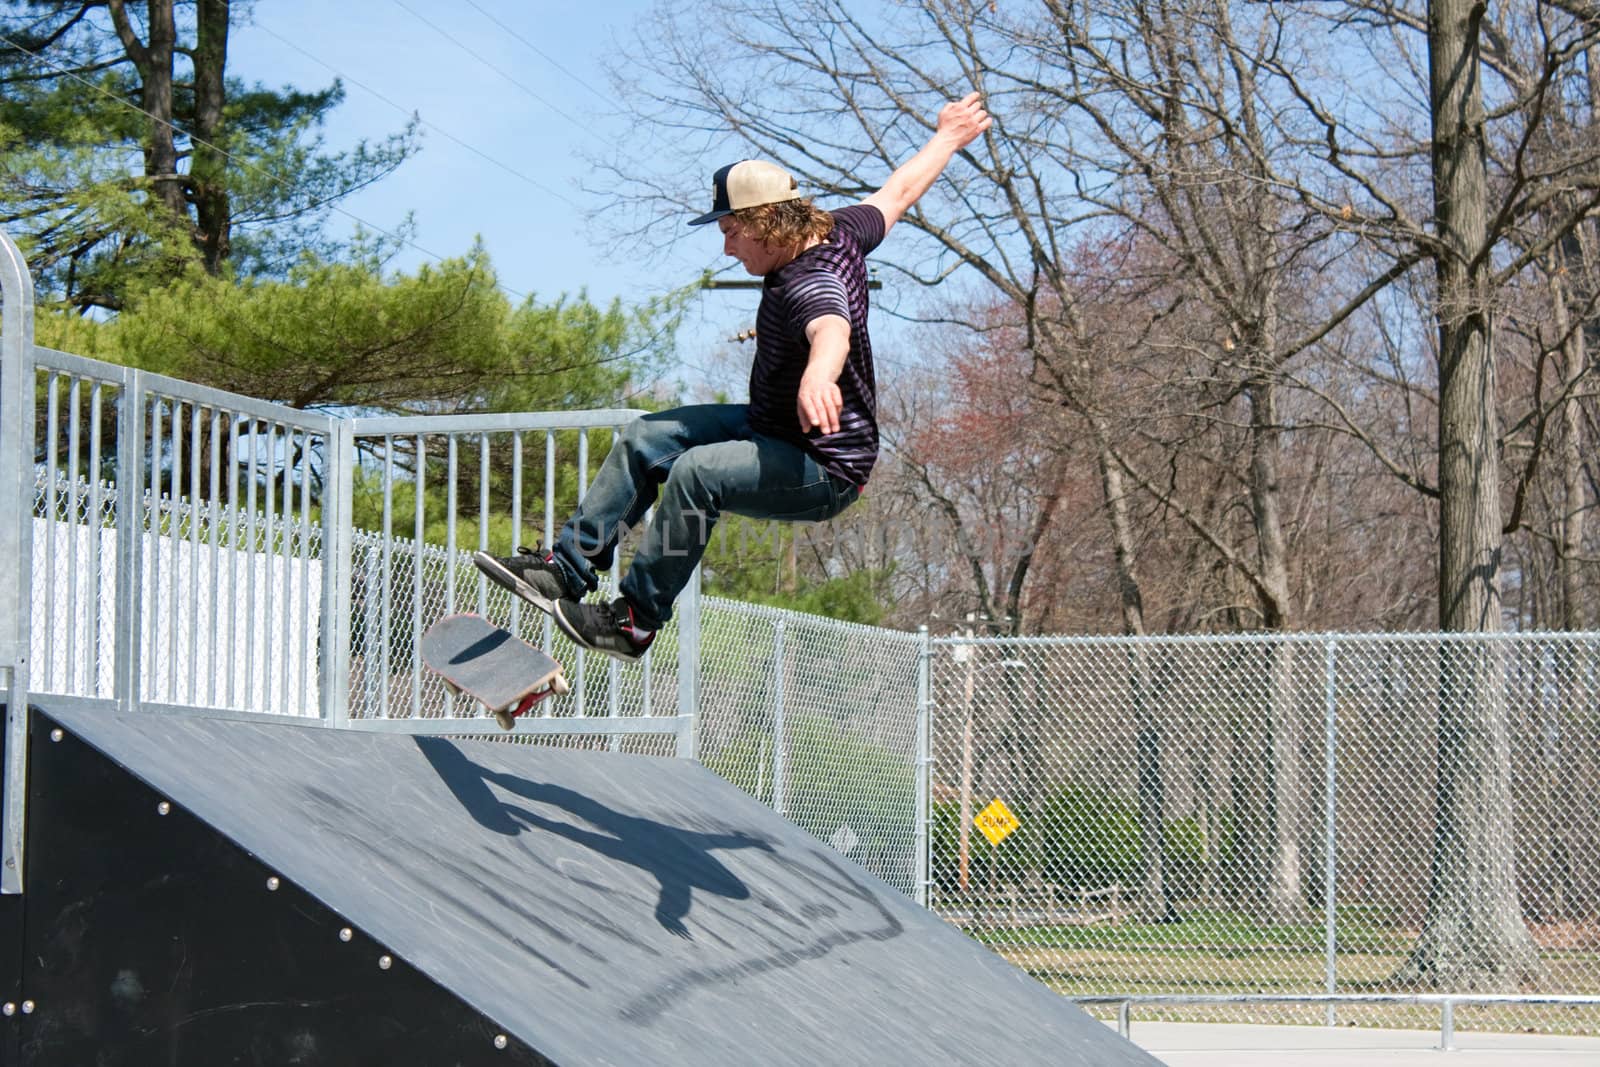 Skateboarder On a Skate Ramp by graficallyminded